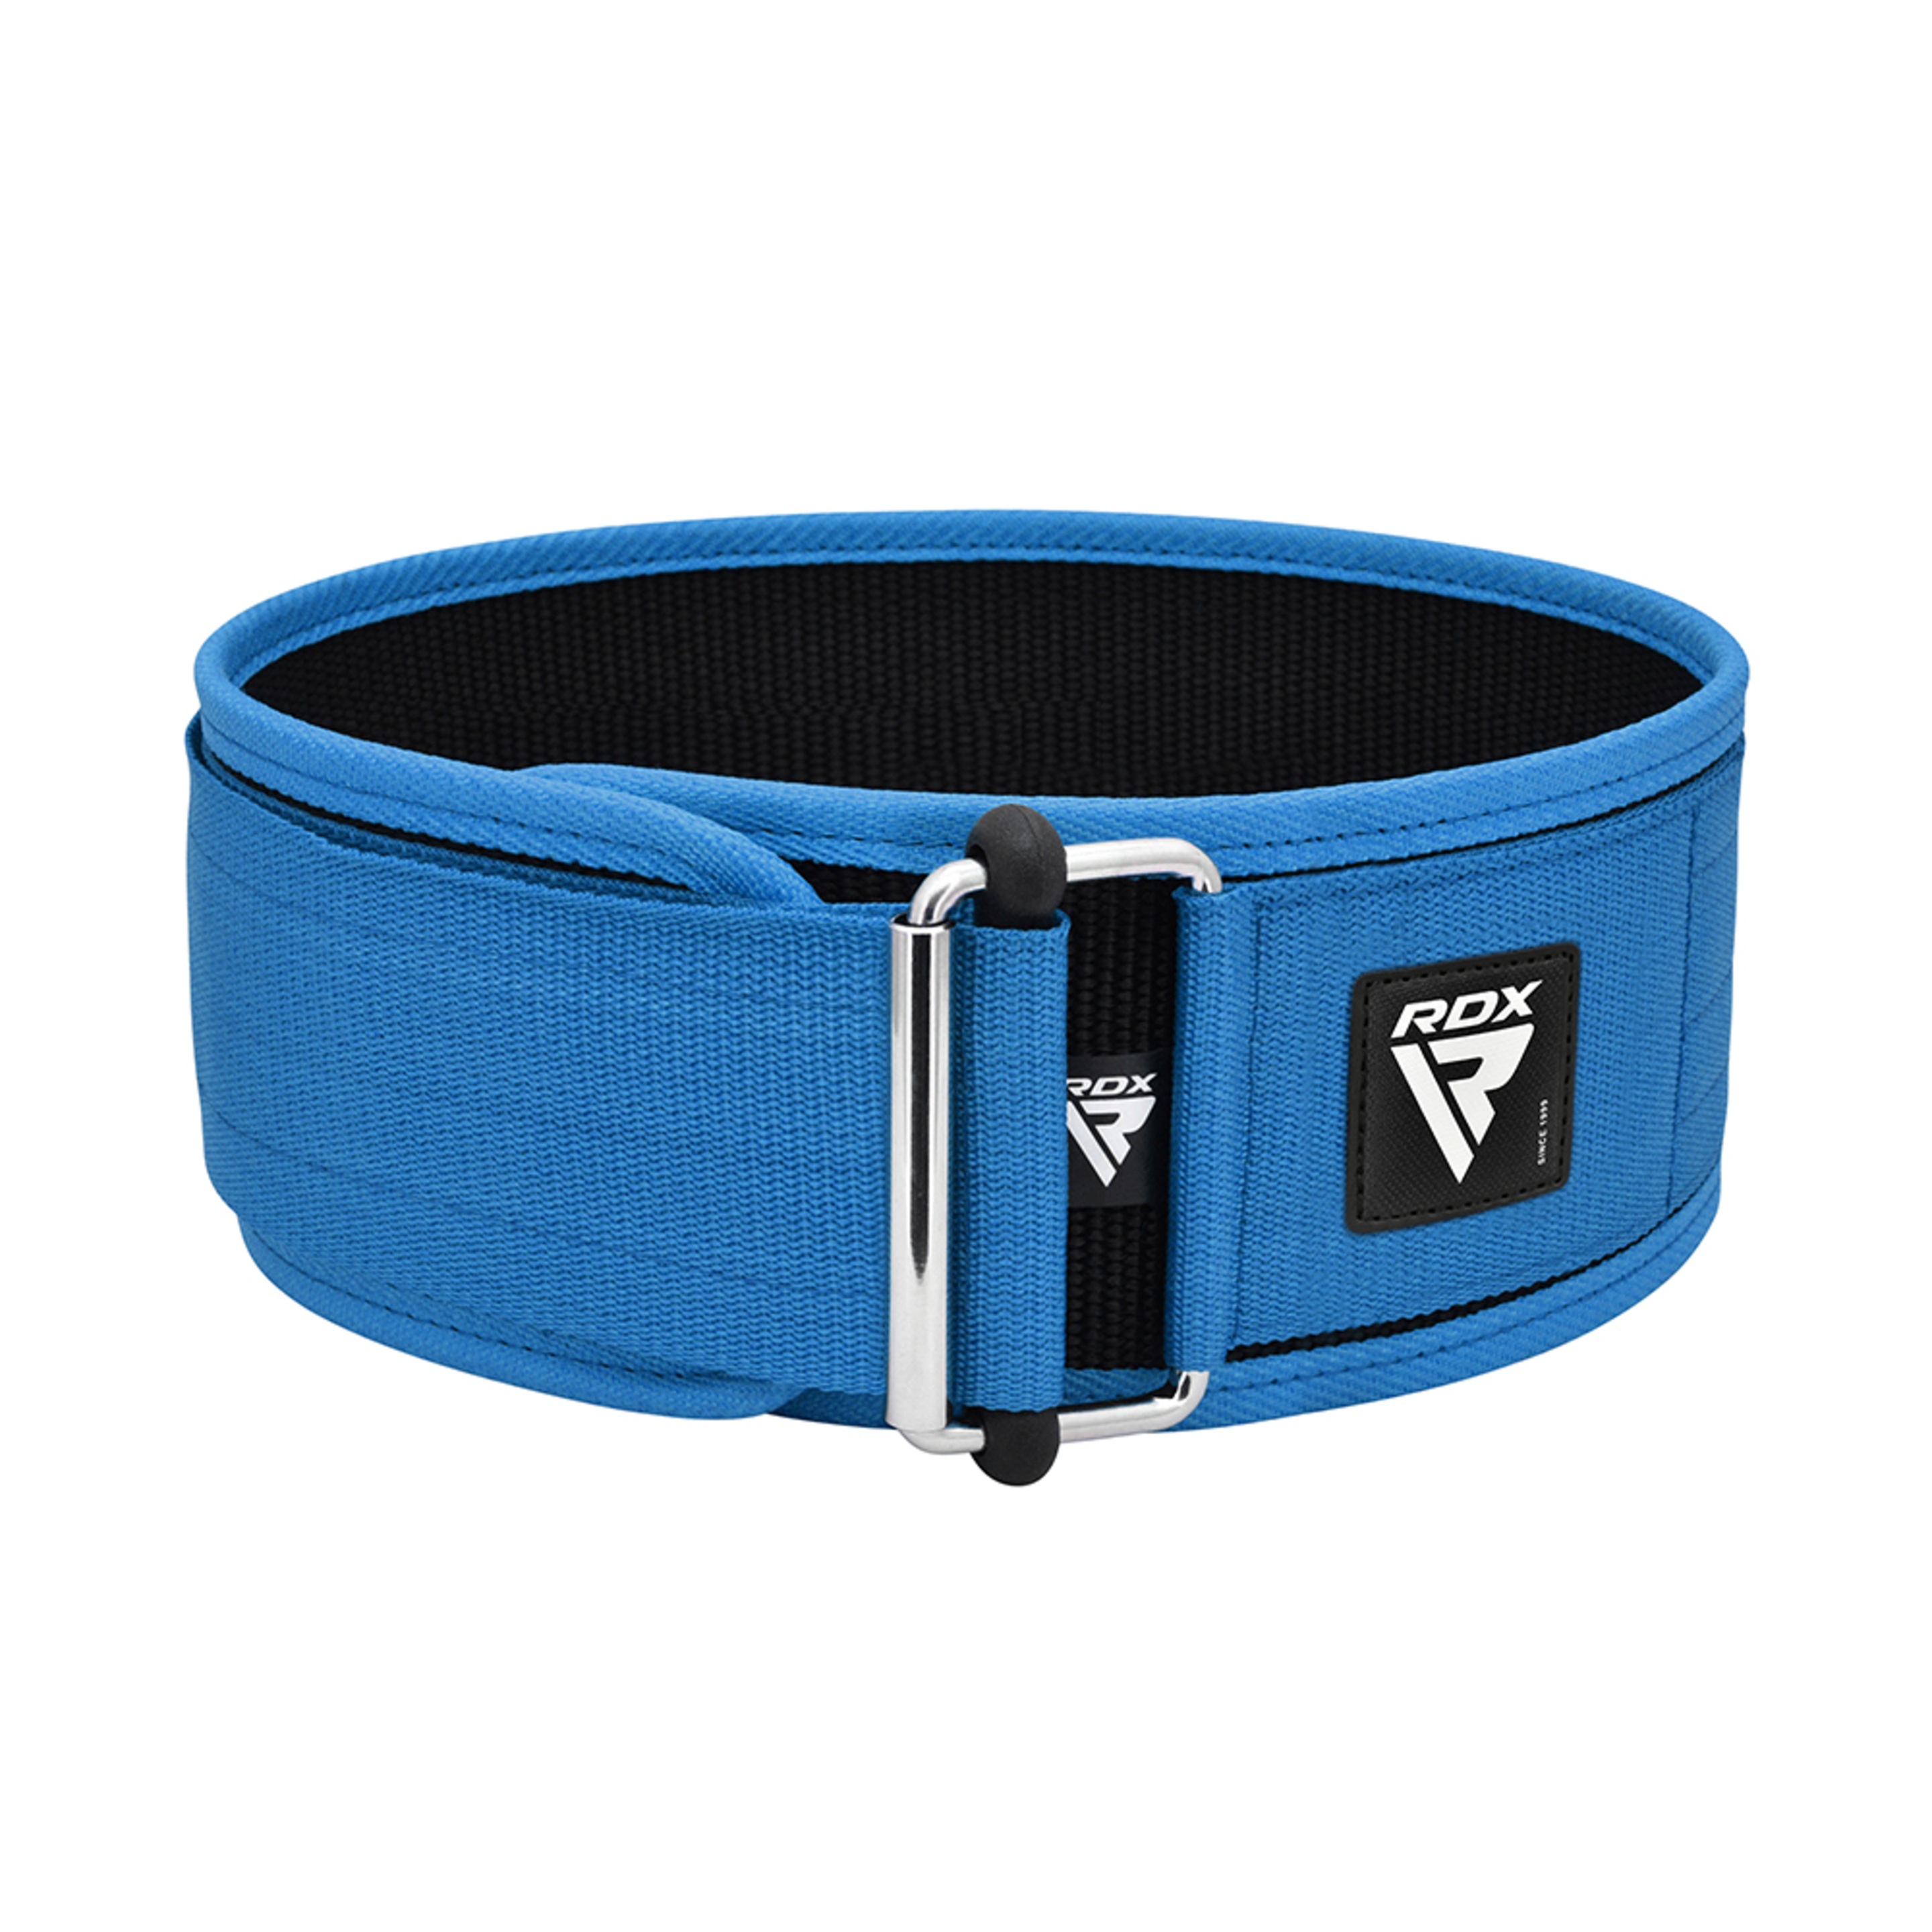 Cinturón De Fitness Rdx Wbs-rx1 - azul - 